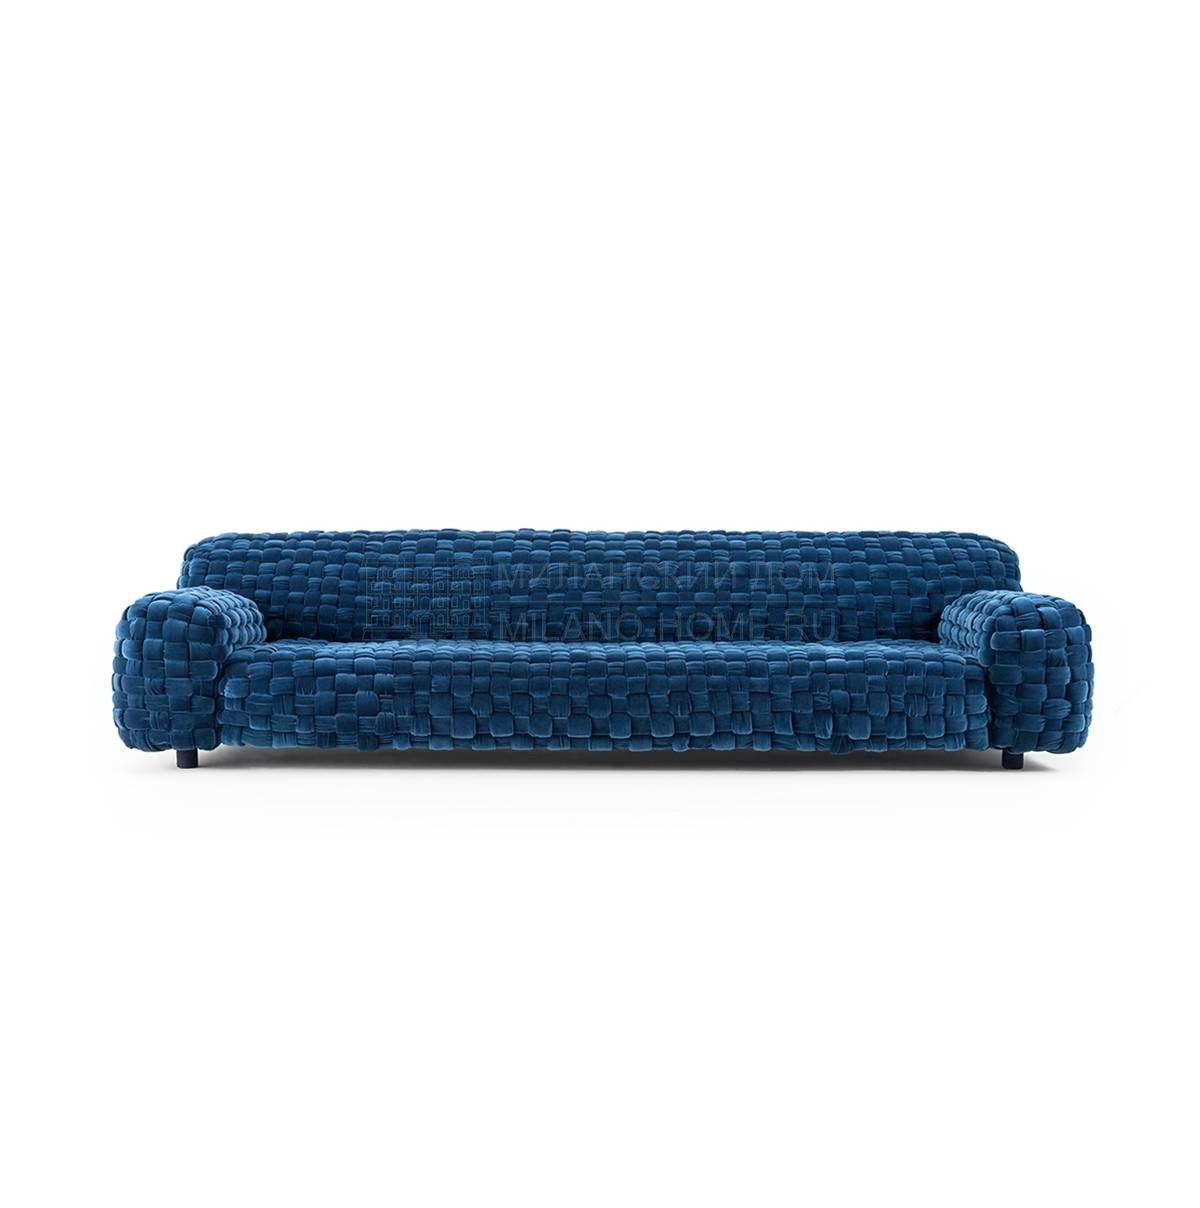 Прямой диван Azul sofa из Италии фабрики TURRI